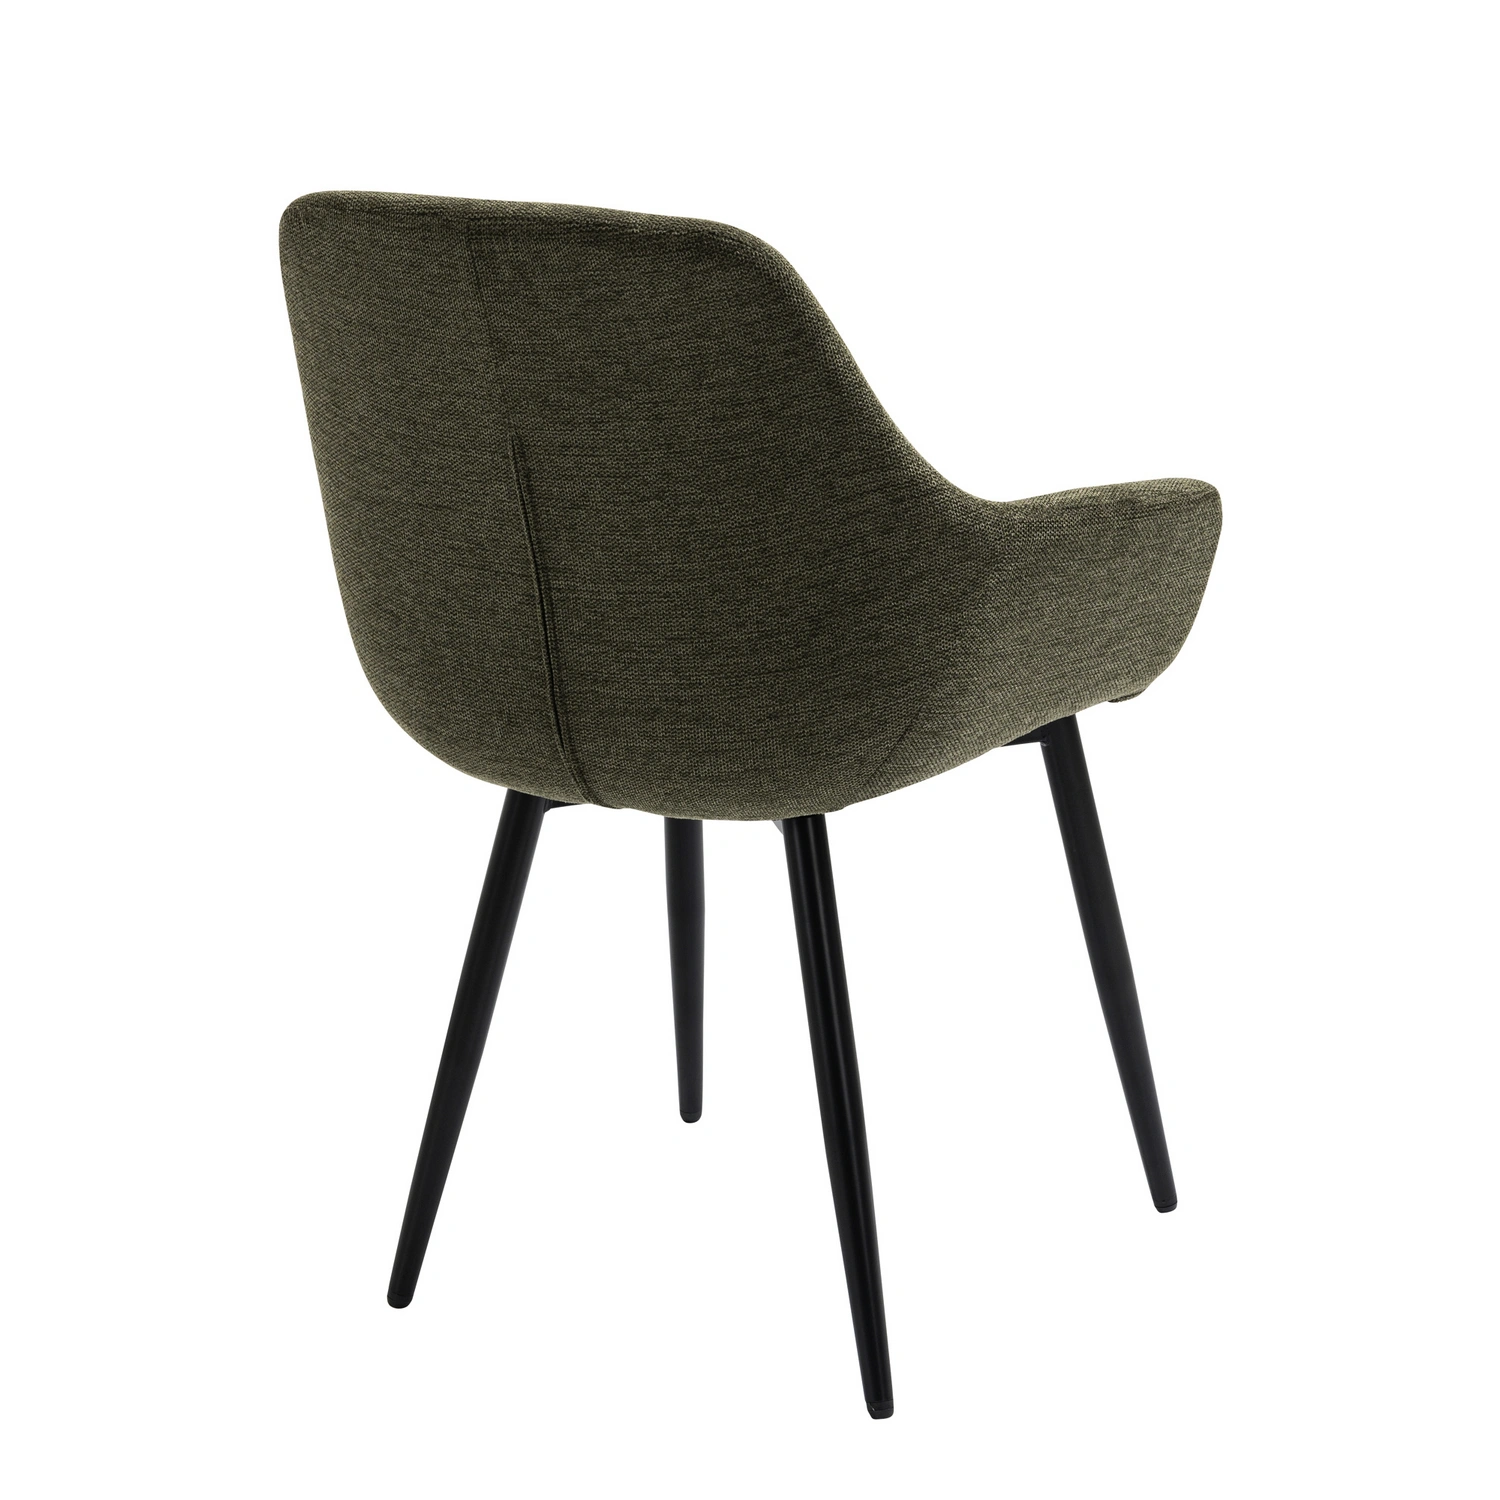 SalesFever Stuhl, Höhe: 86 cm, 2 stk grün/schwarz